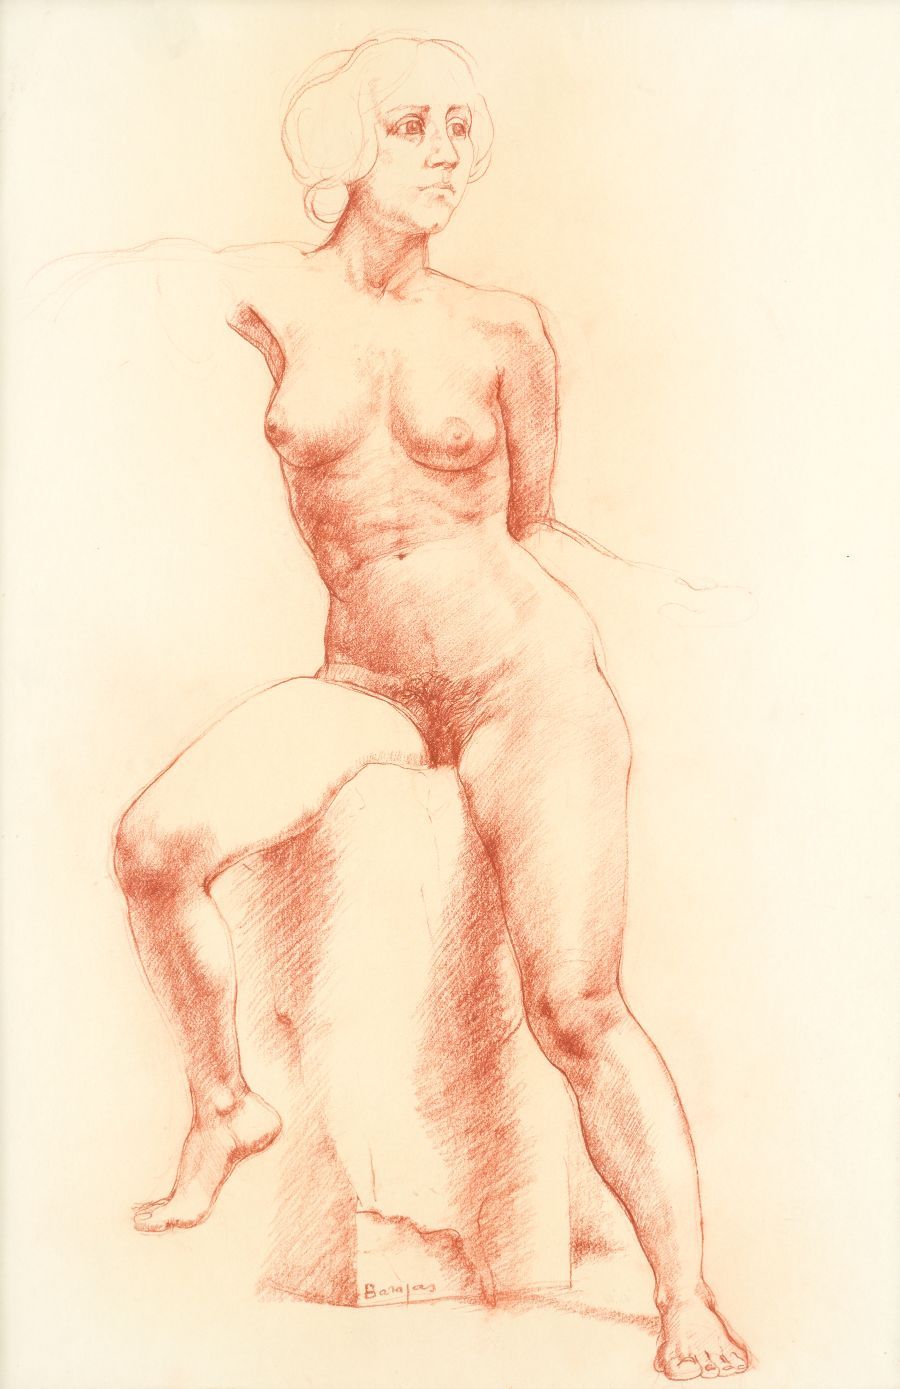 ANDRÉS BARAJAS (1941 / 2006) "Female nude" 底部签有 "Sanguine "字样，纸质。47,5 x 32,5 cm